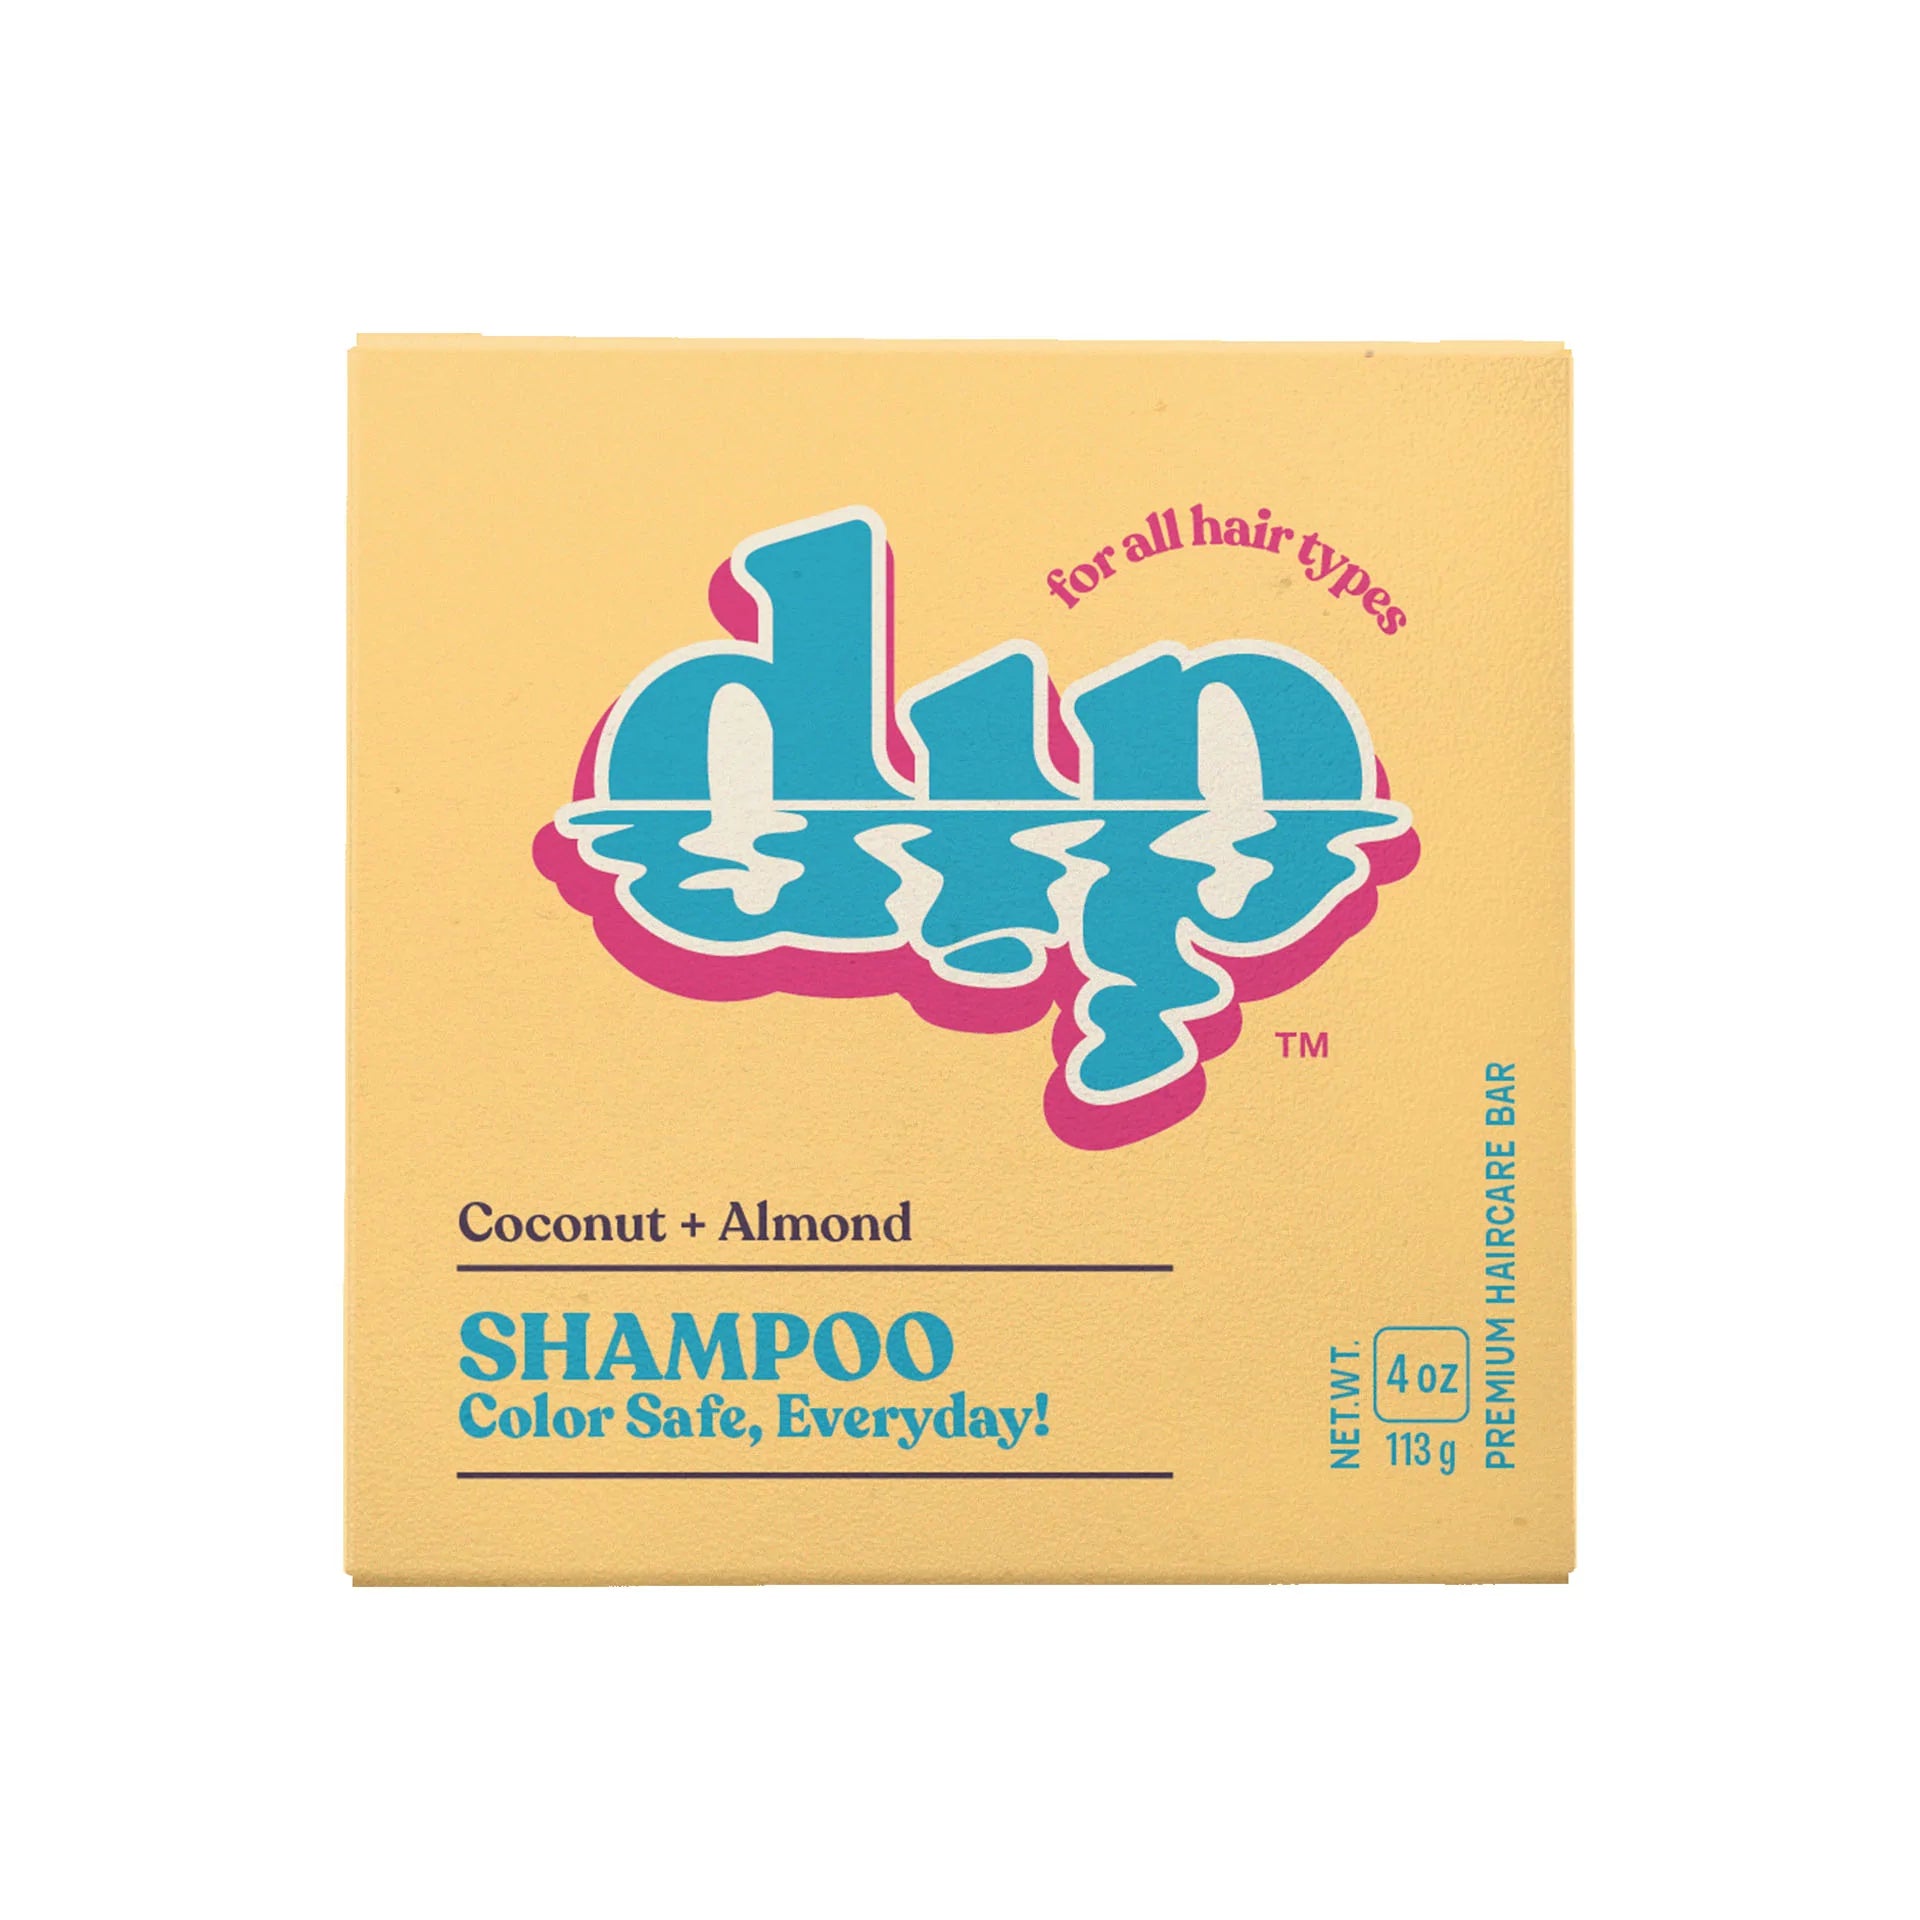 DIP Color Safe Shampoo Bar for Every Day